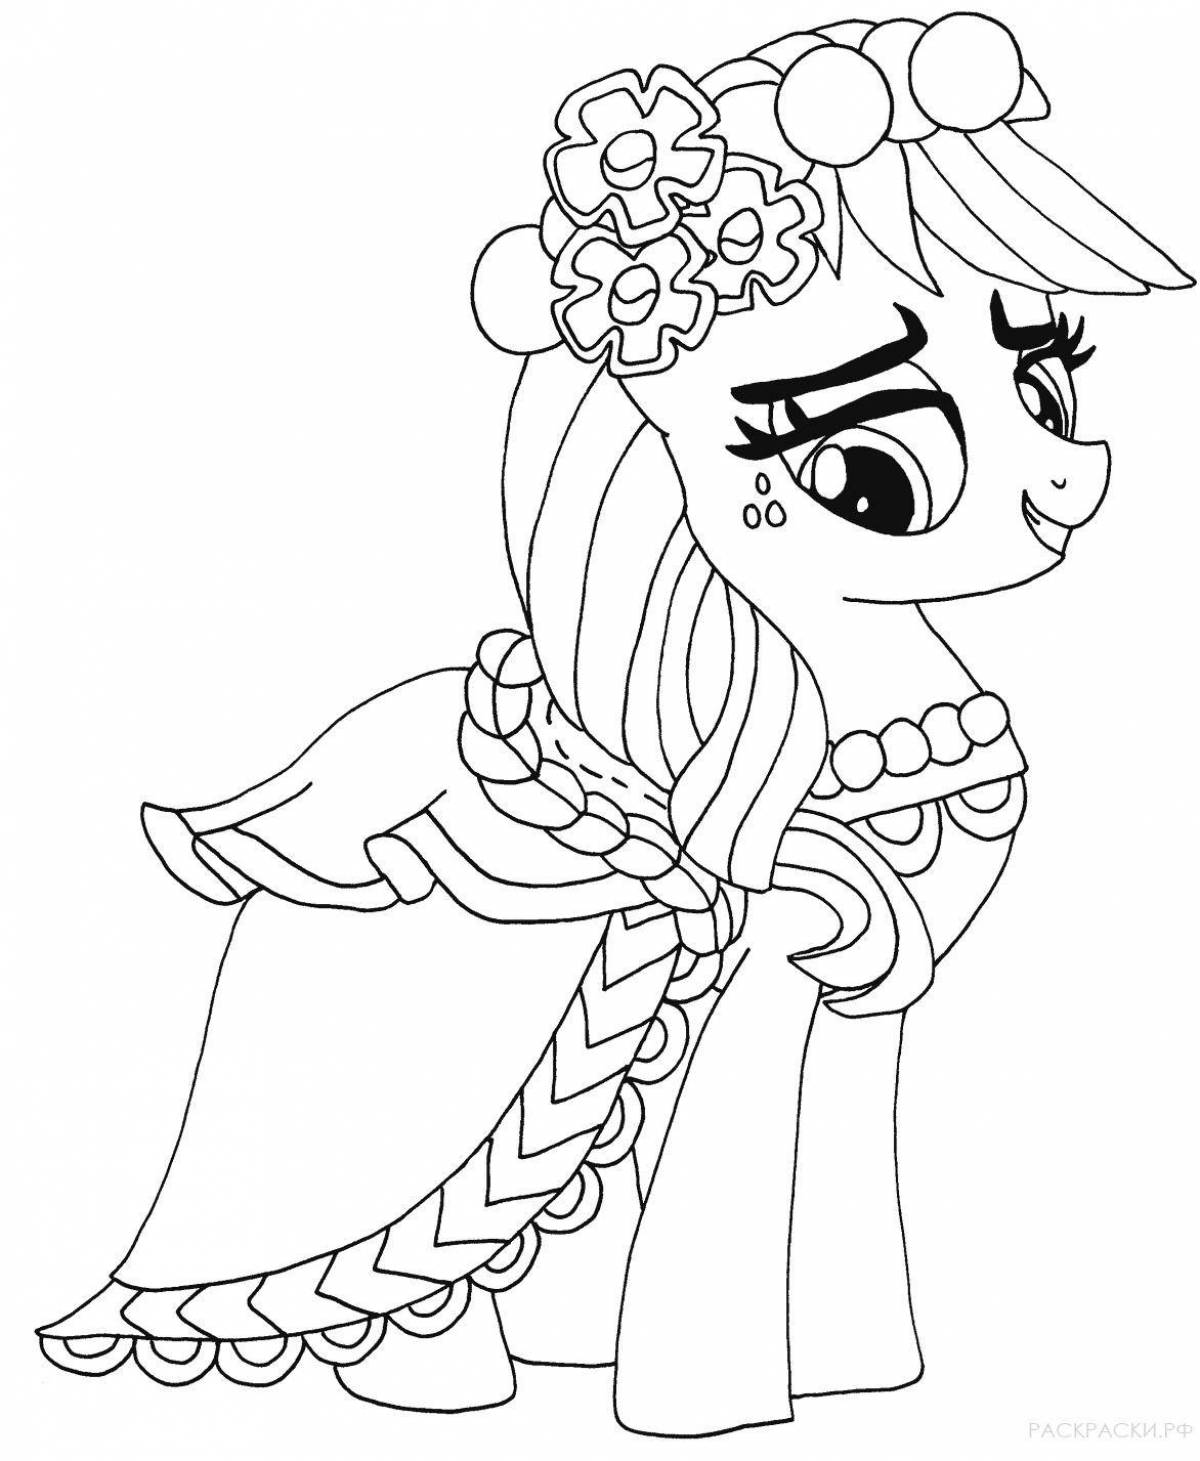 Coloring page adorable pony applejack